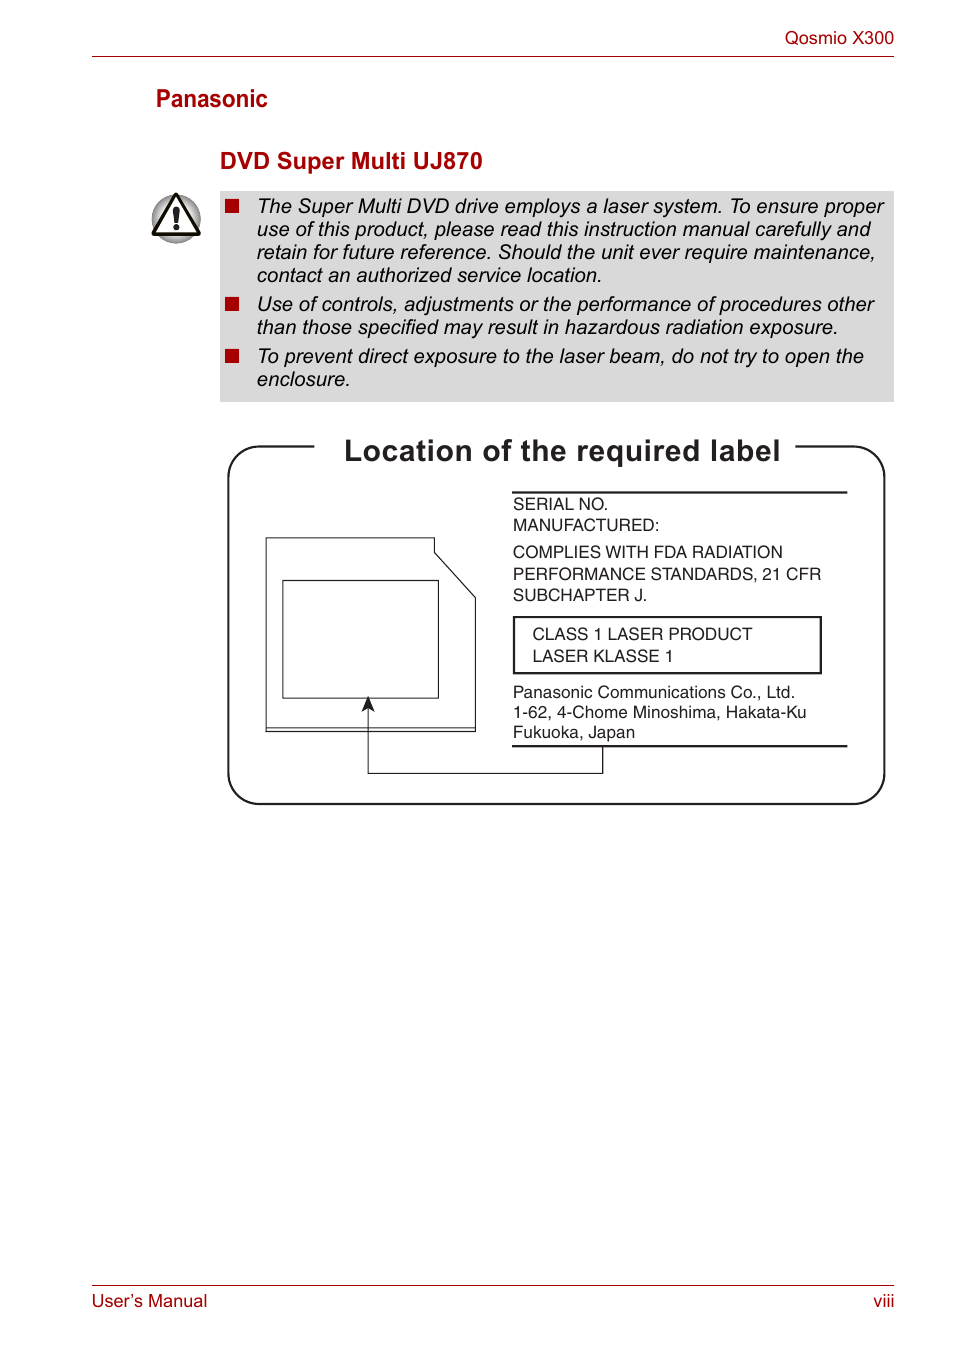 Location of the required label, Panasonic | Toshiba Qosmio X300 User Manual | Page 8 / 219